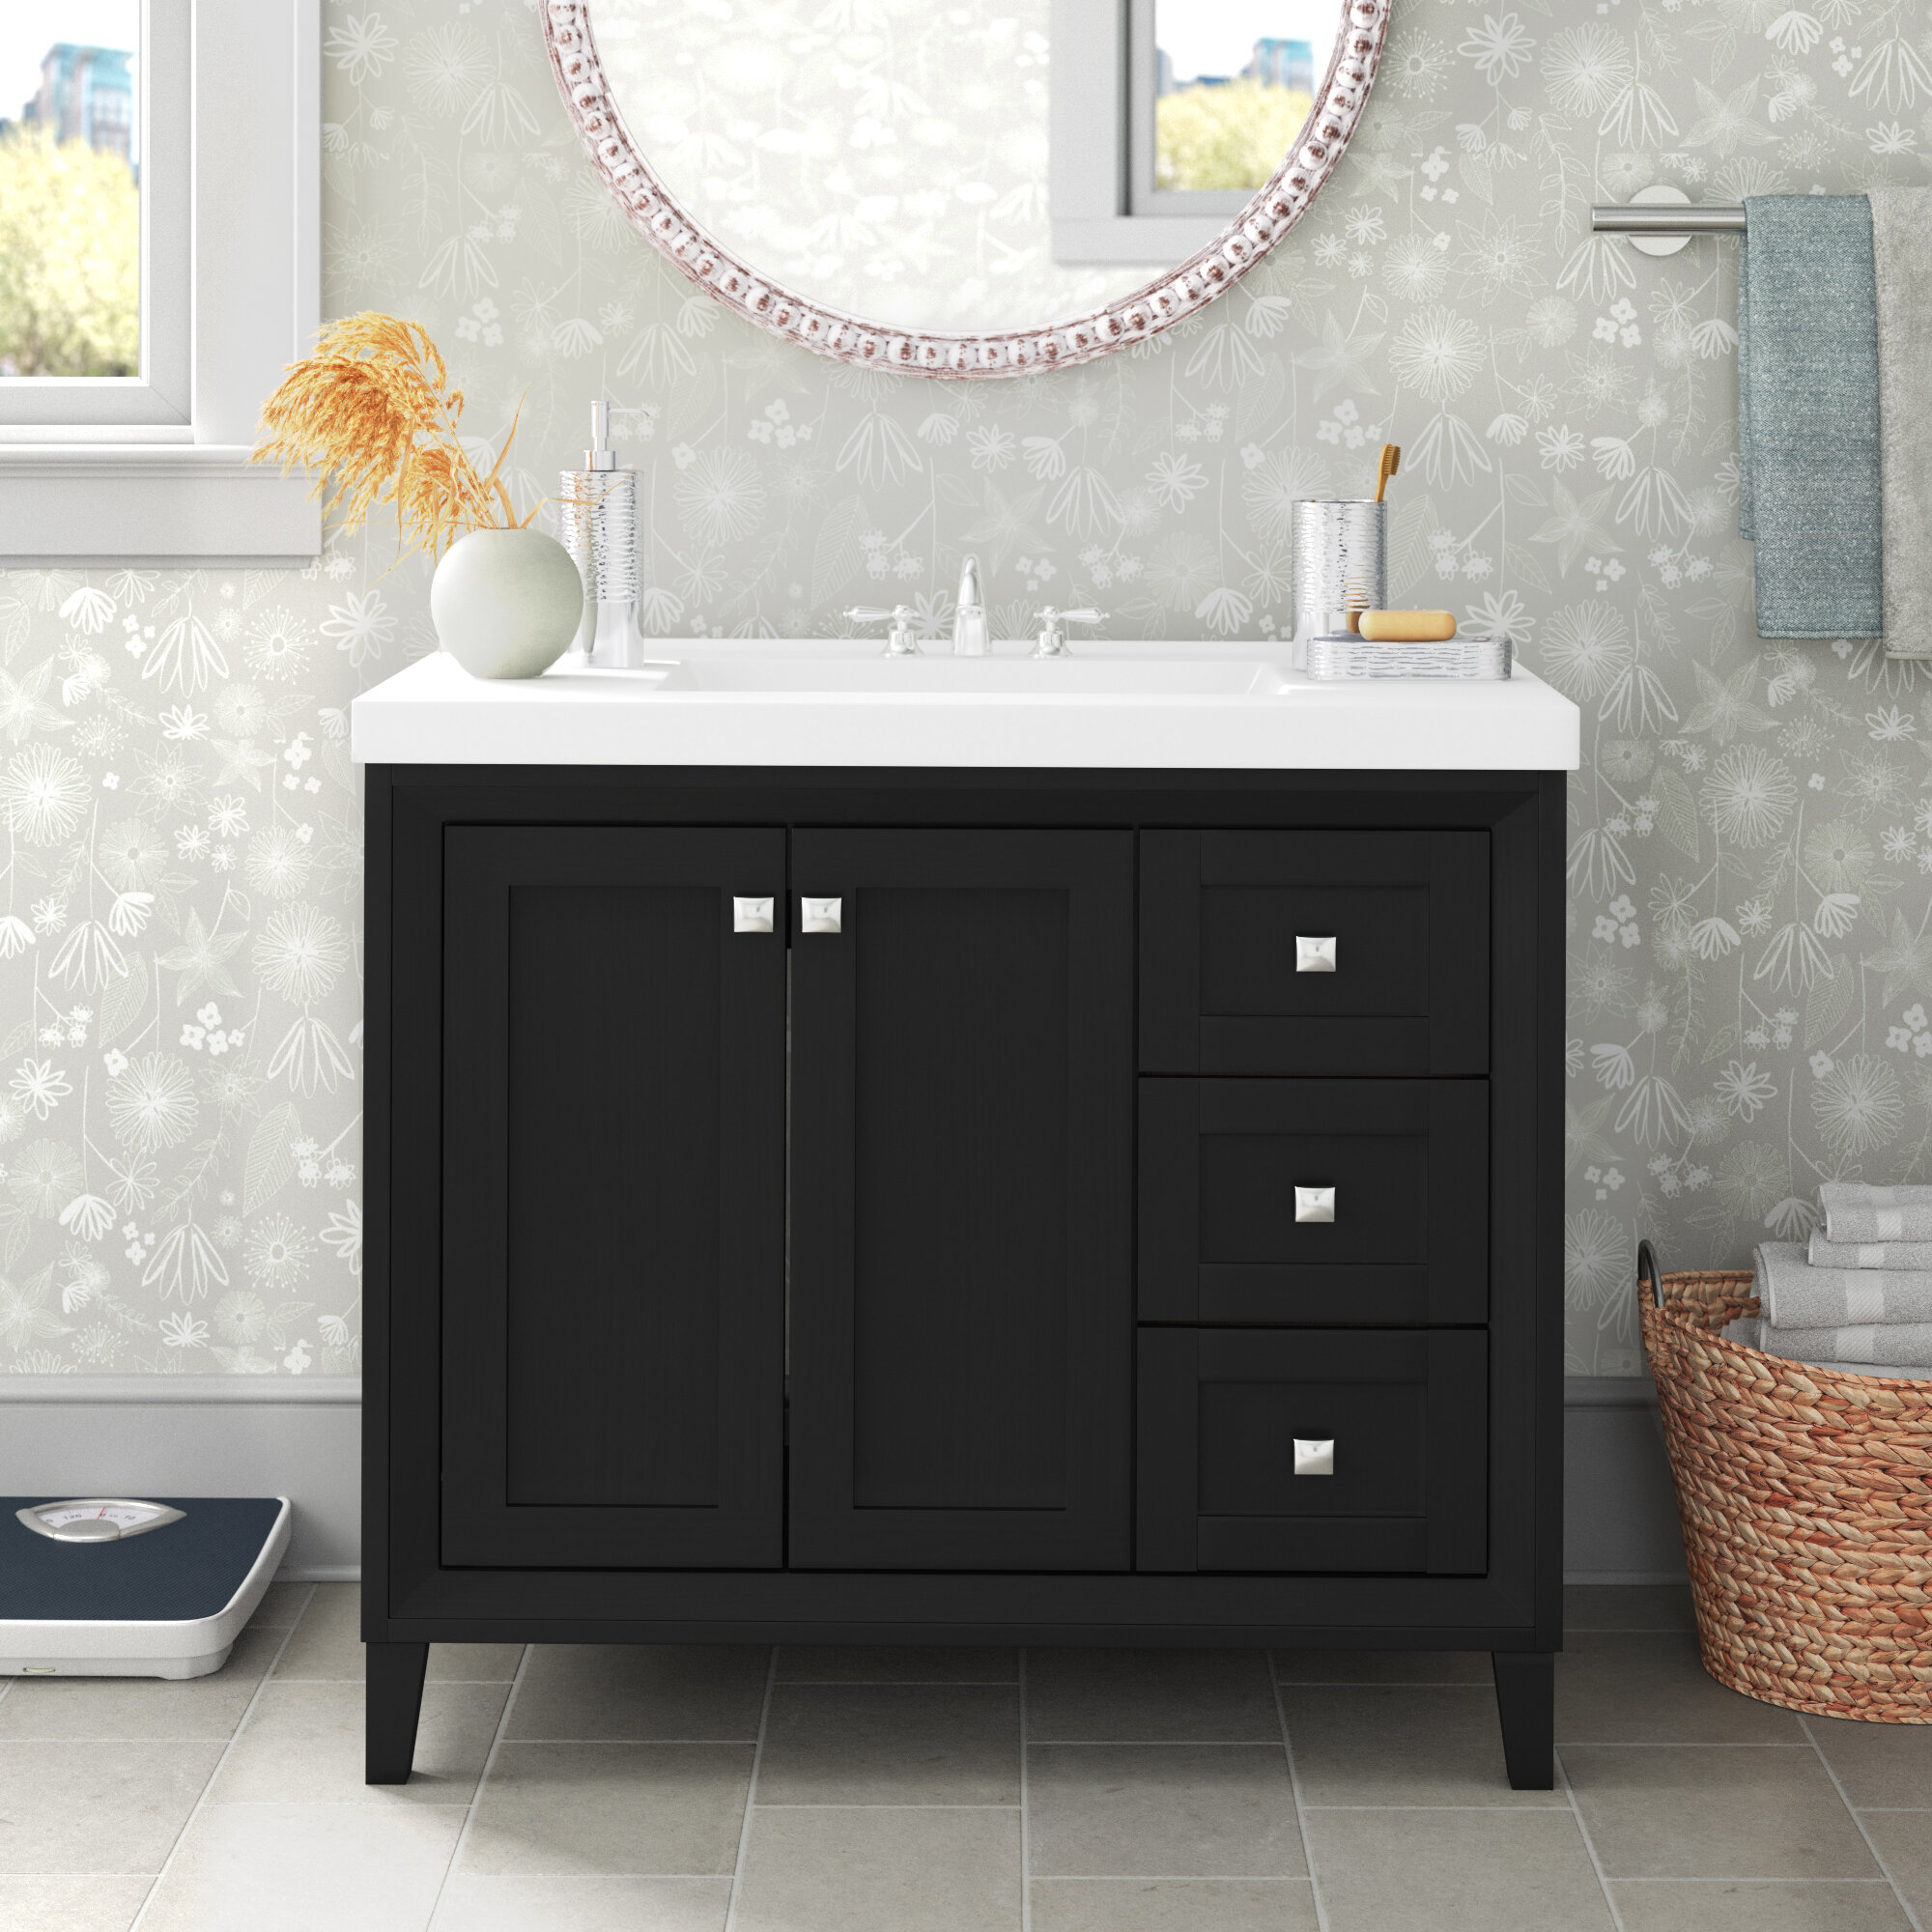 How to Organize Bathroom Drawers + Cupboards - Merrick's Art